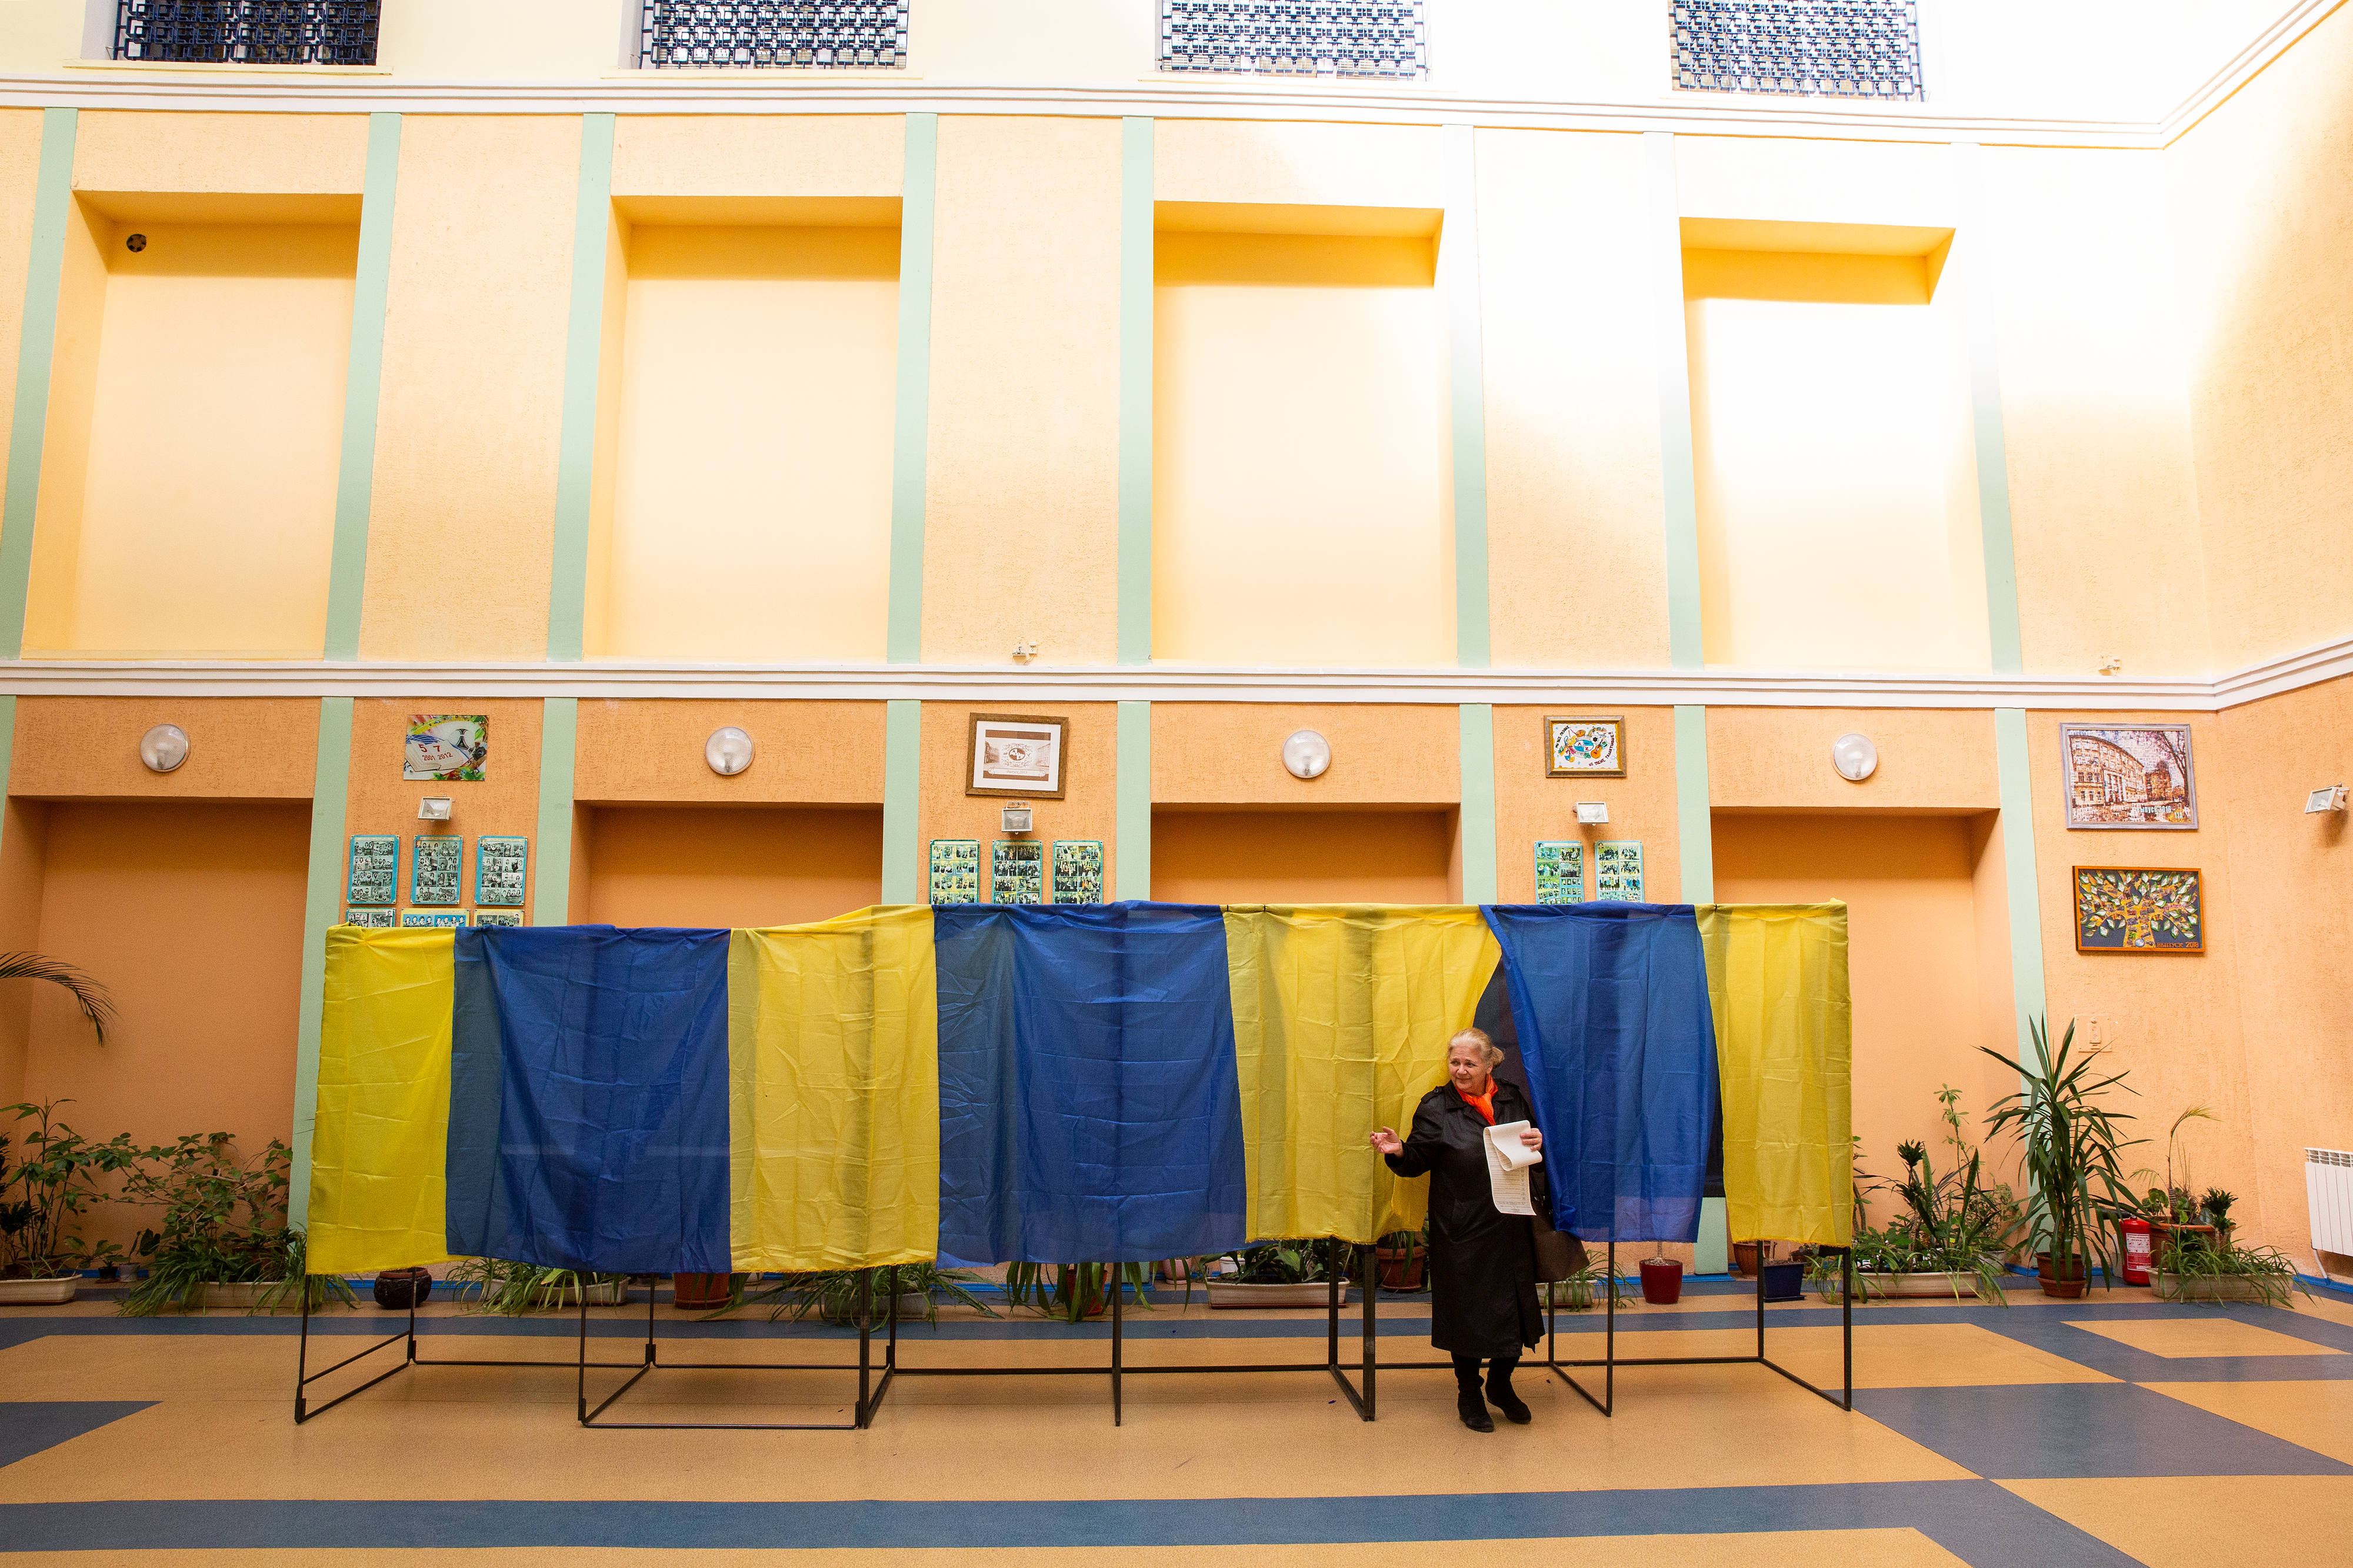 Ukraine Presidential Election 2019